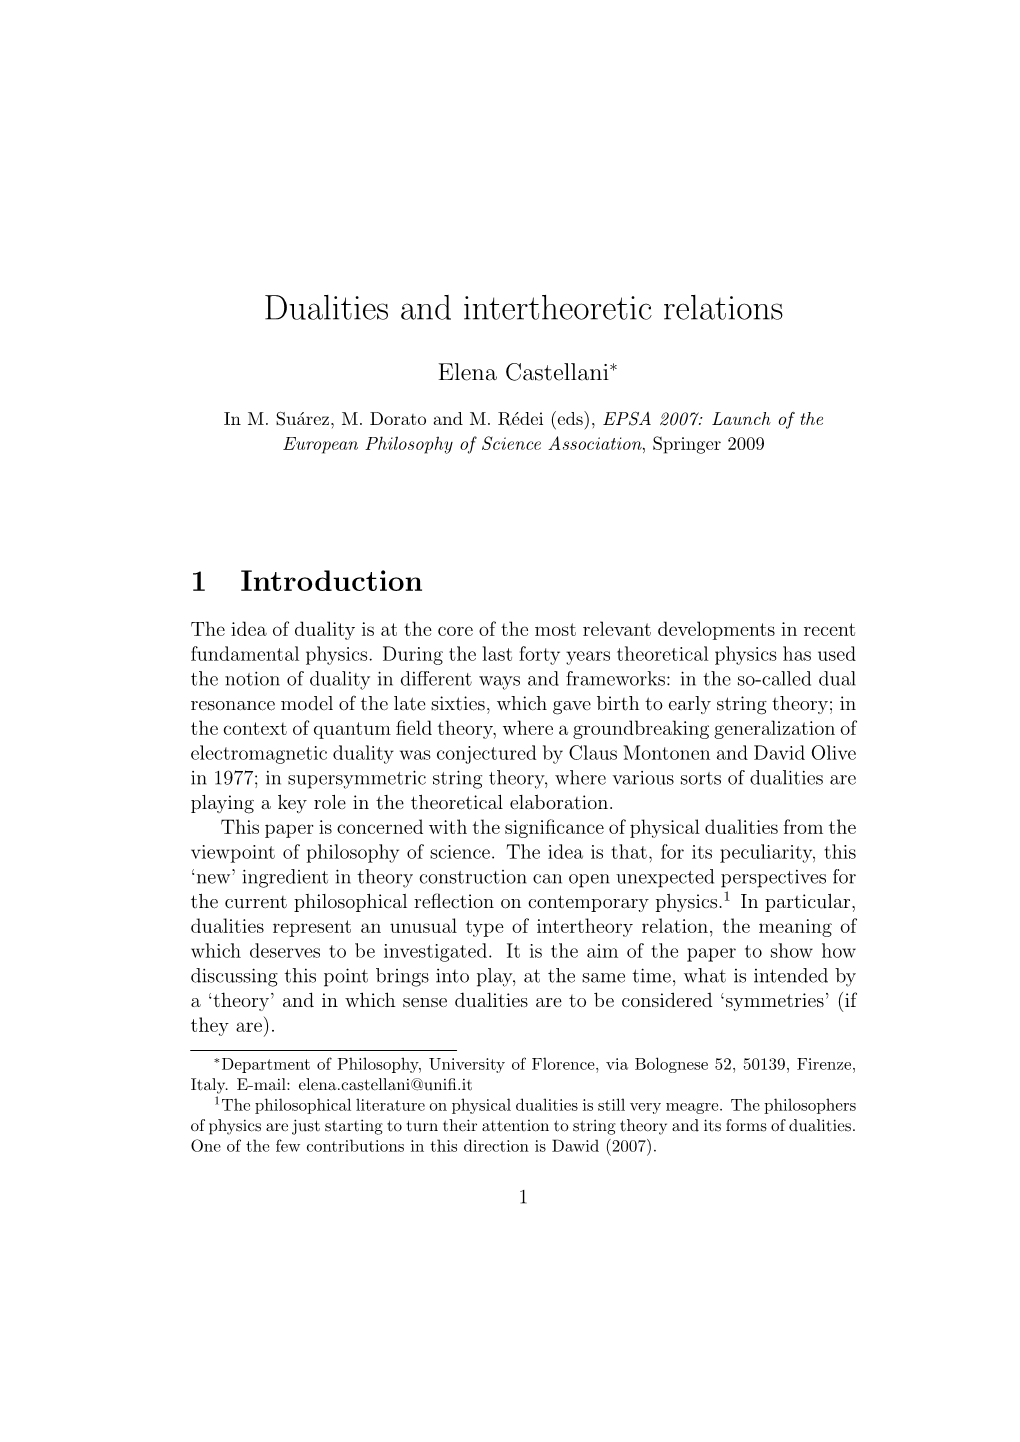 Dualities and Intertheoretic Relations